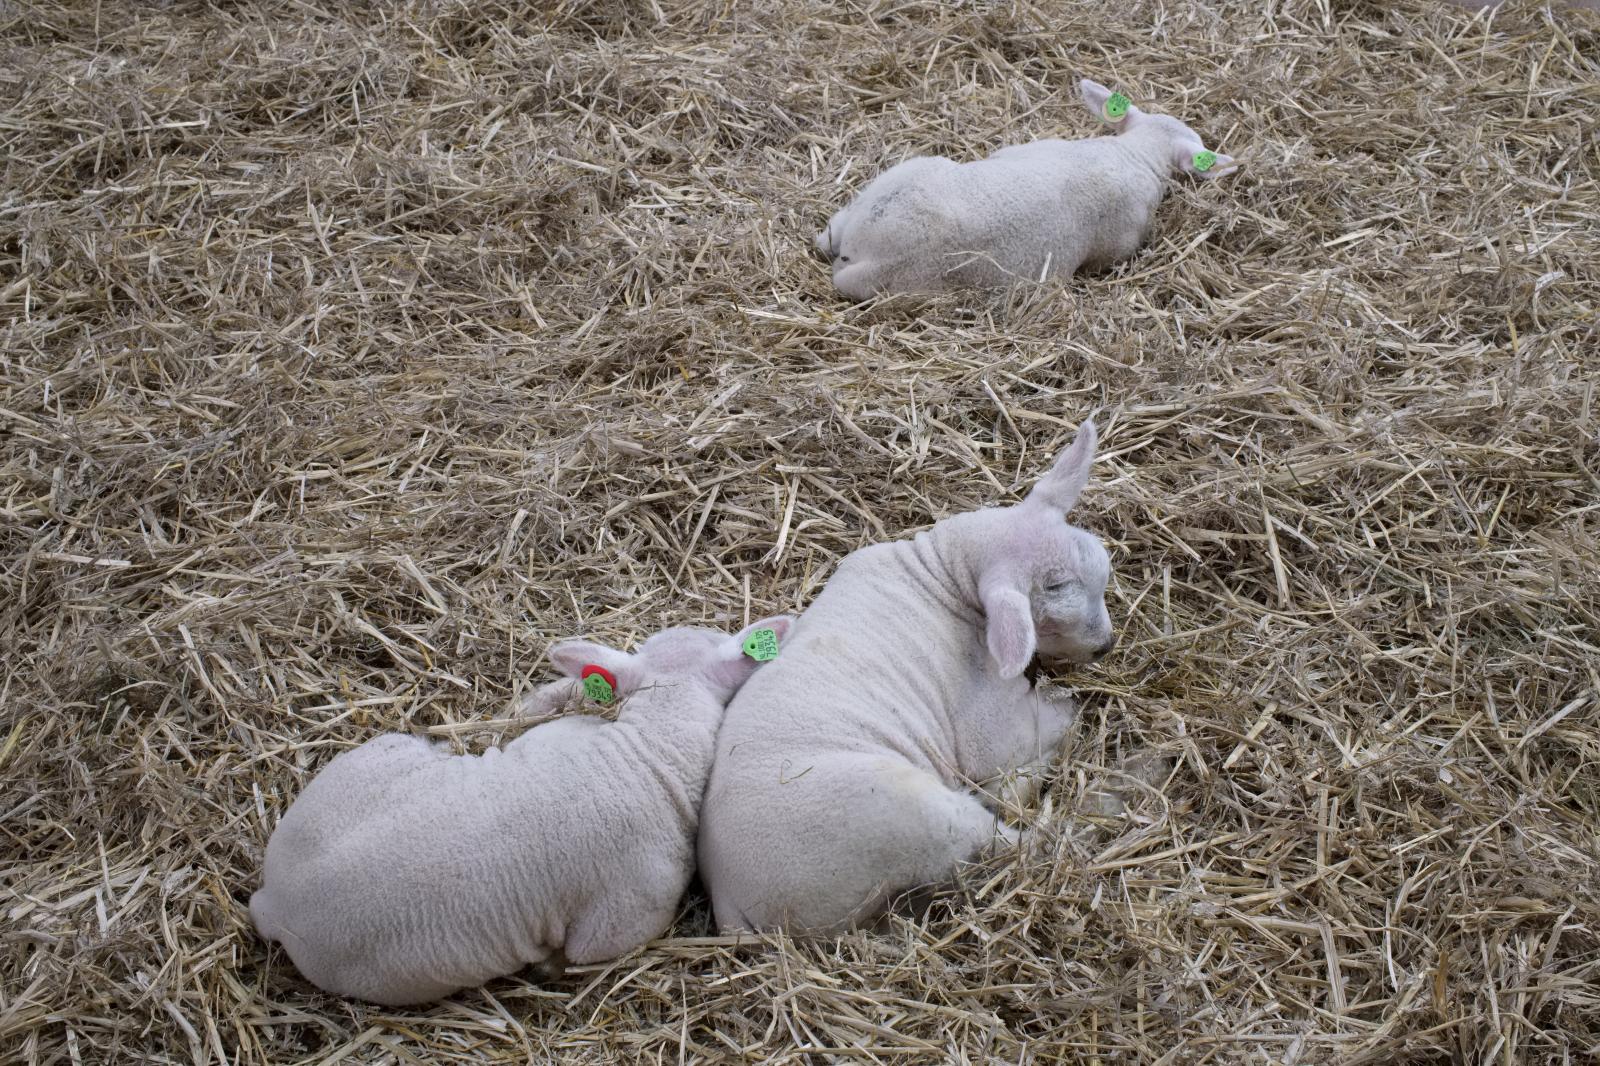 Texel Lambs | Buy this image